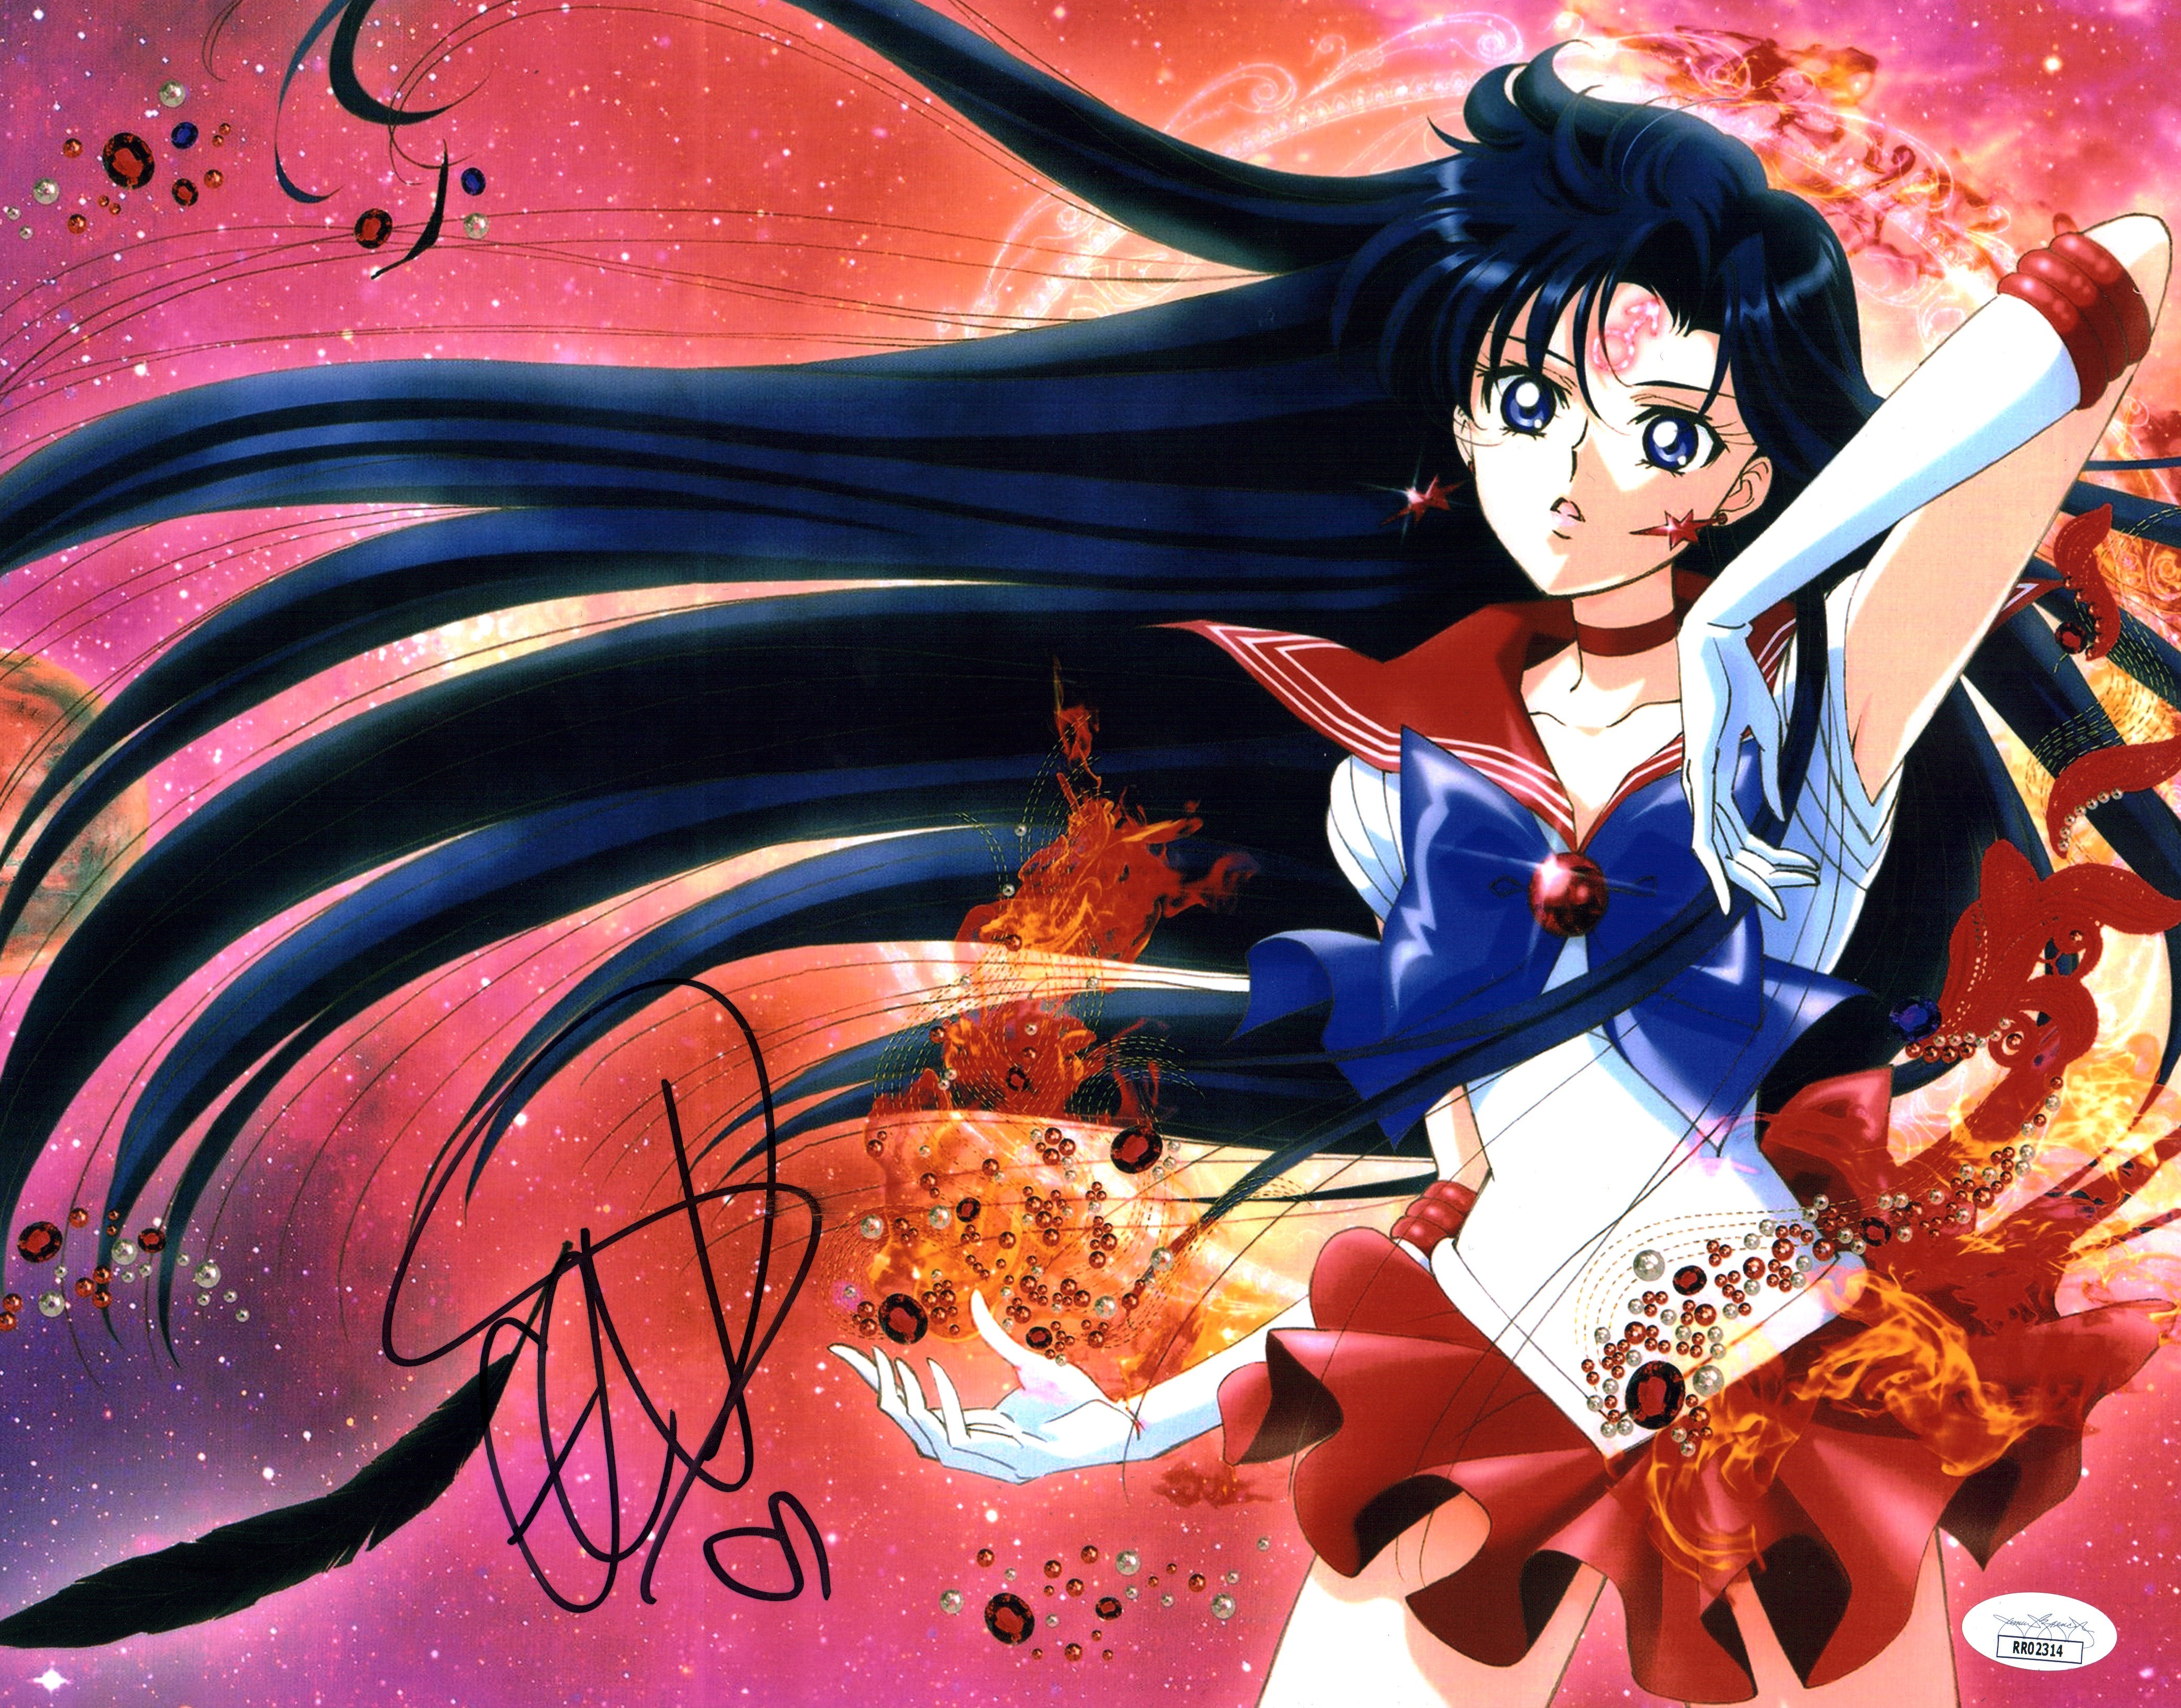 Cristina Vee Sailor Moon 11x14 Signed Photo Poster JSA Certified Autograph